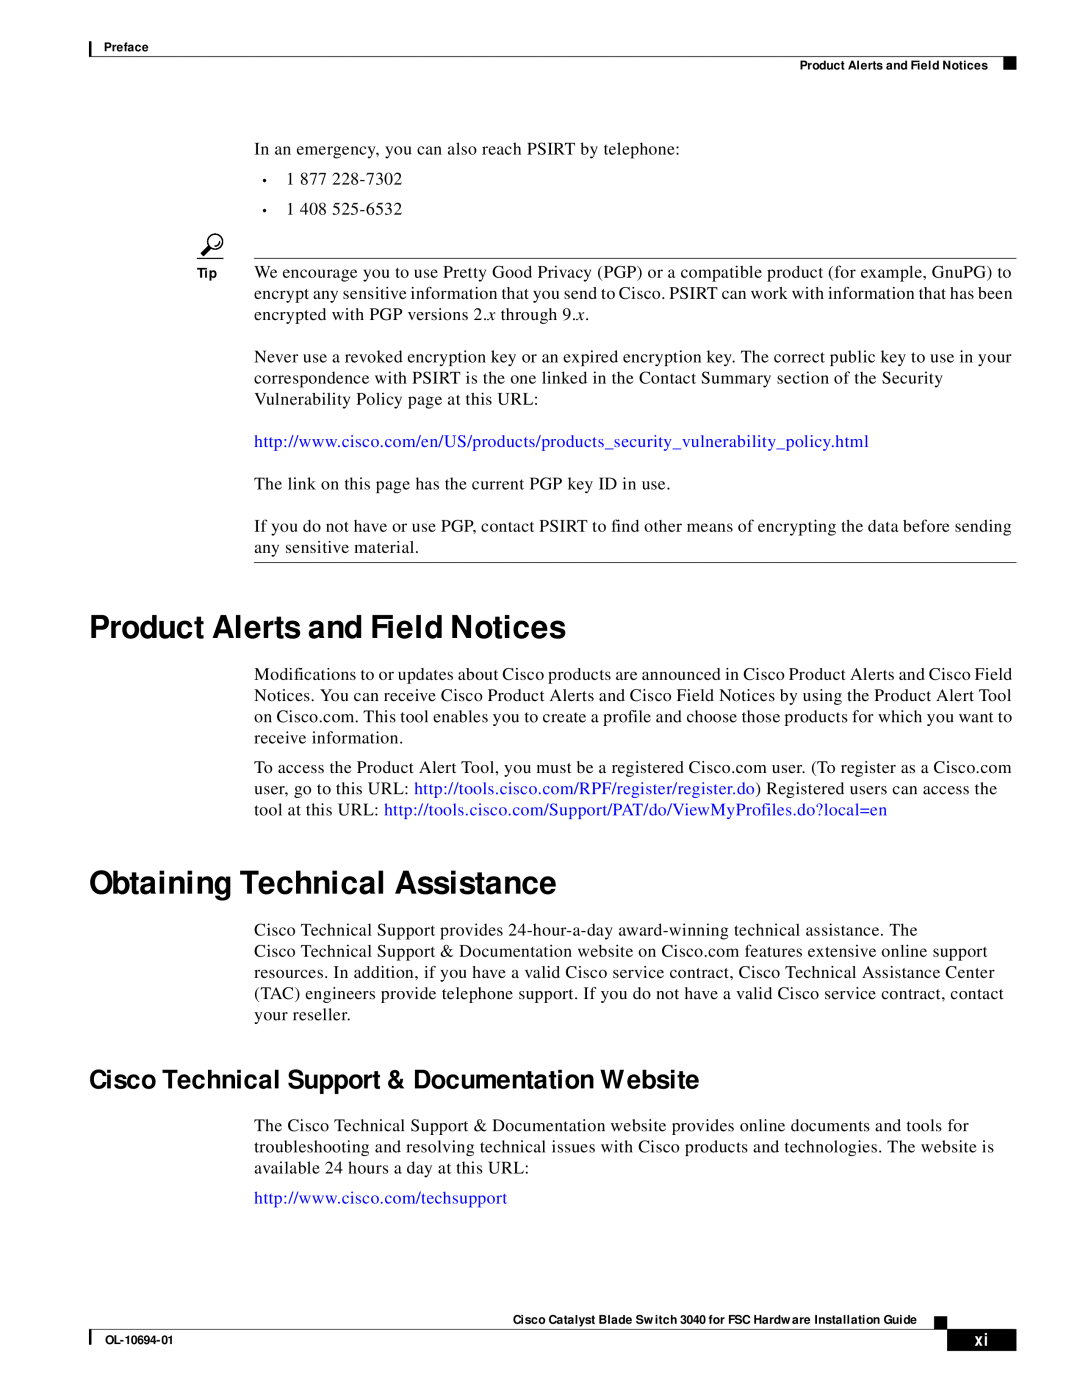 3D Connexion OL-10694-01 appendix Product Alerts and Field Notices, Obtaining Technical Assistance 